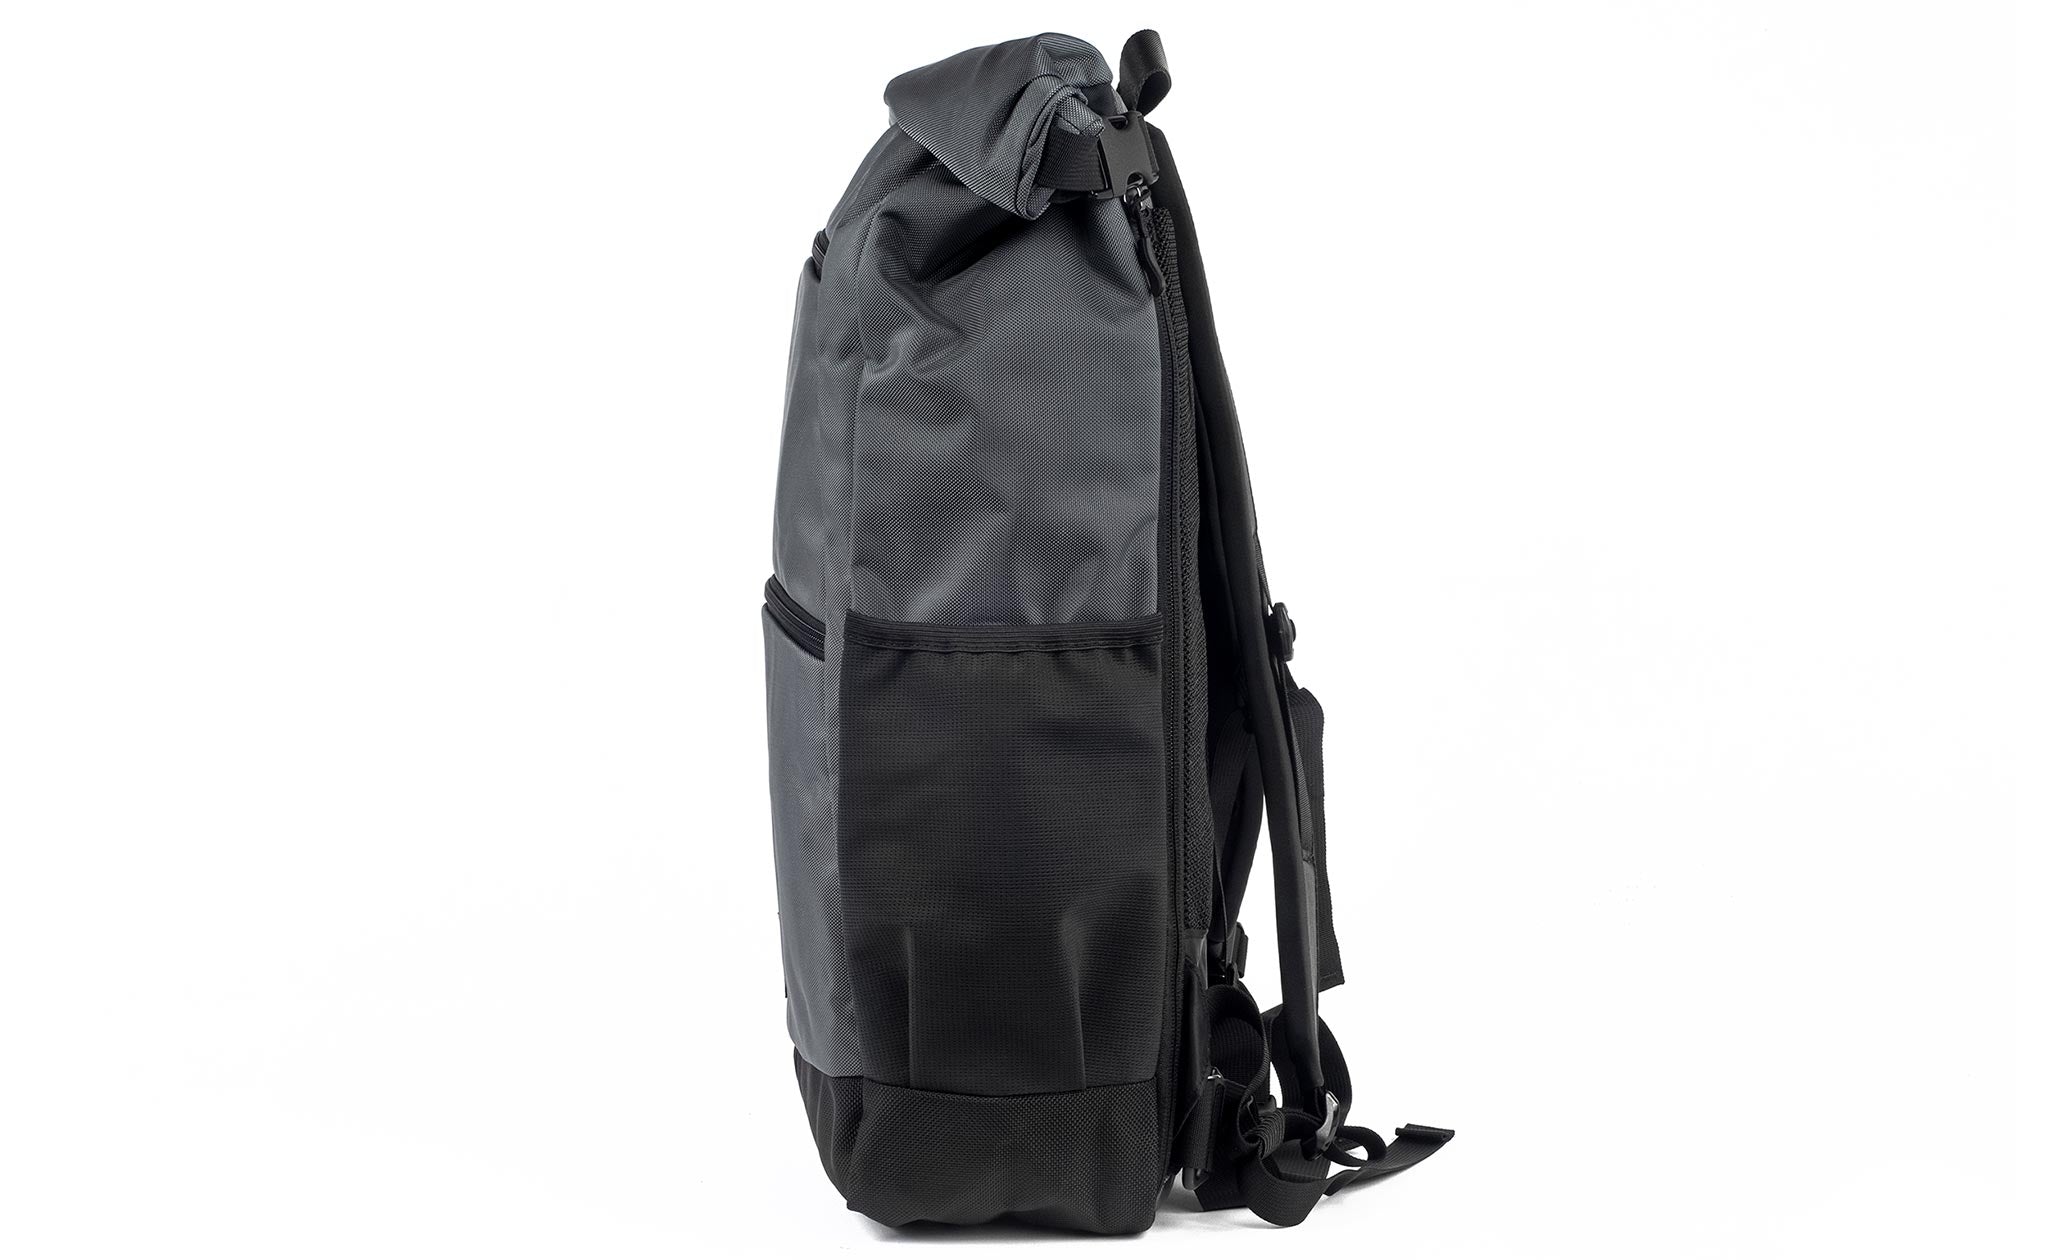 TOM BIHN Addax 31, Roll-Top Backpack, 31L, 12.8